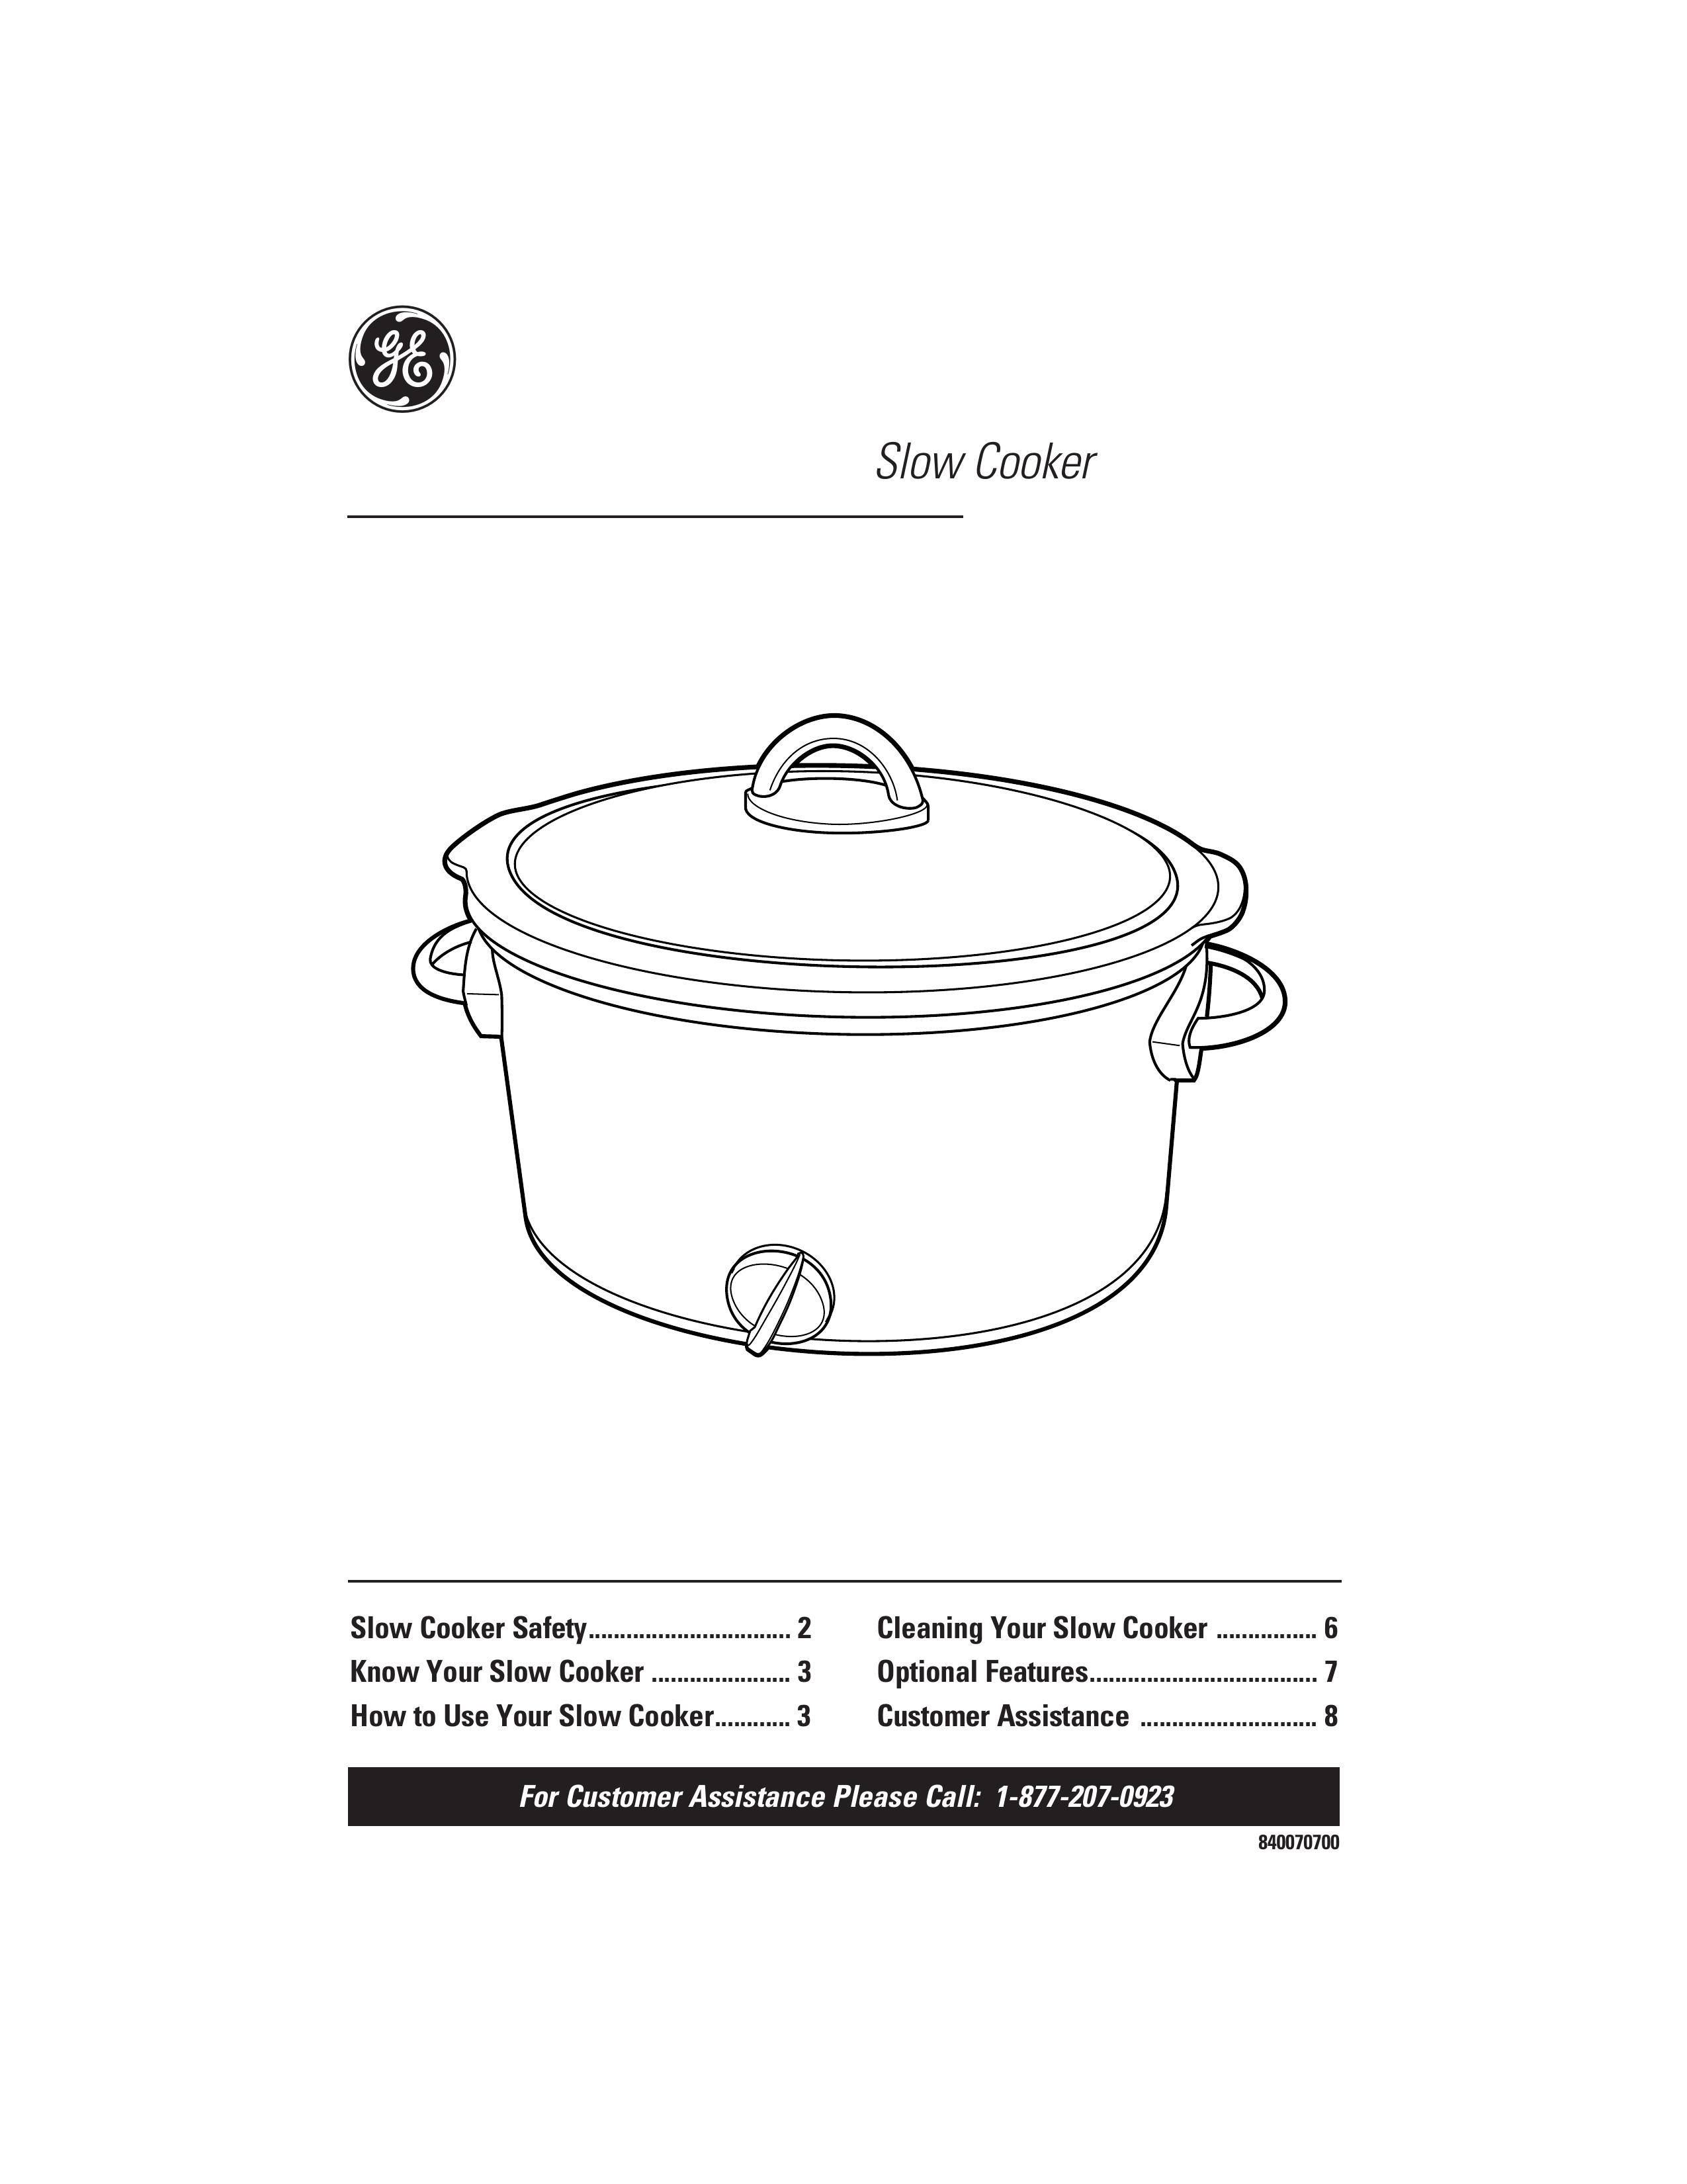 GE 840070700 Slow Cooker User Manual